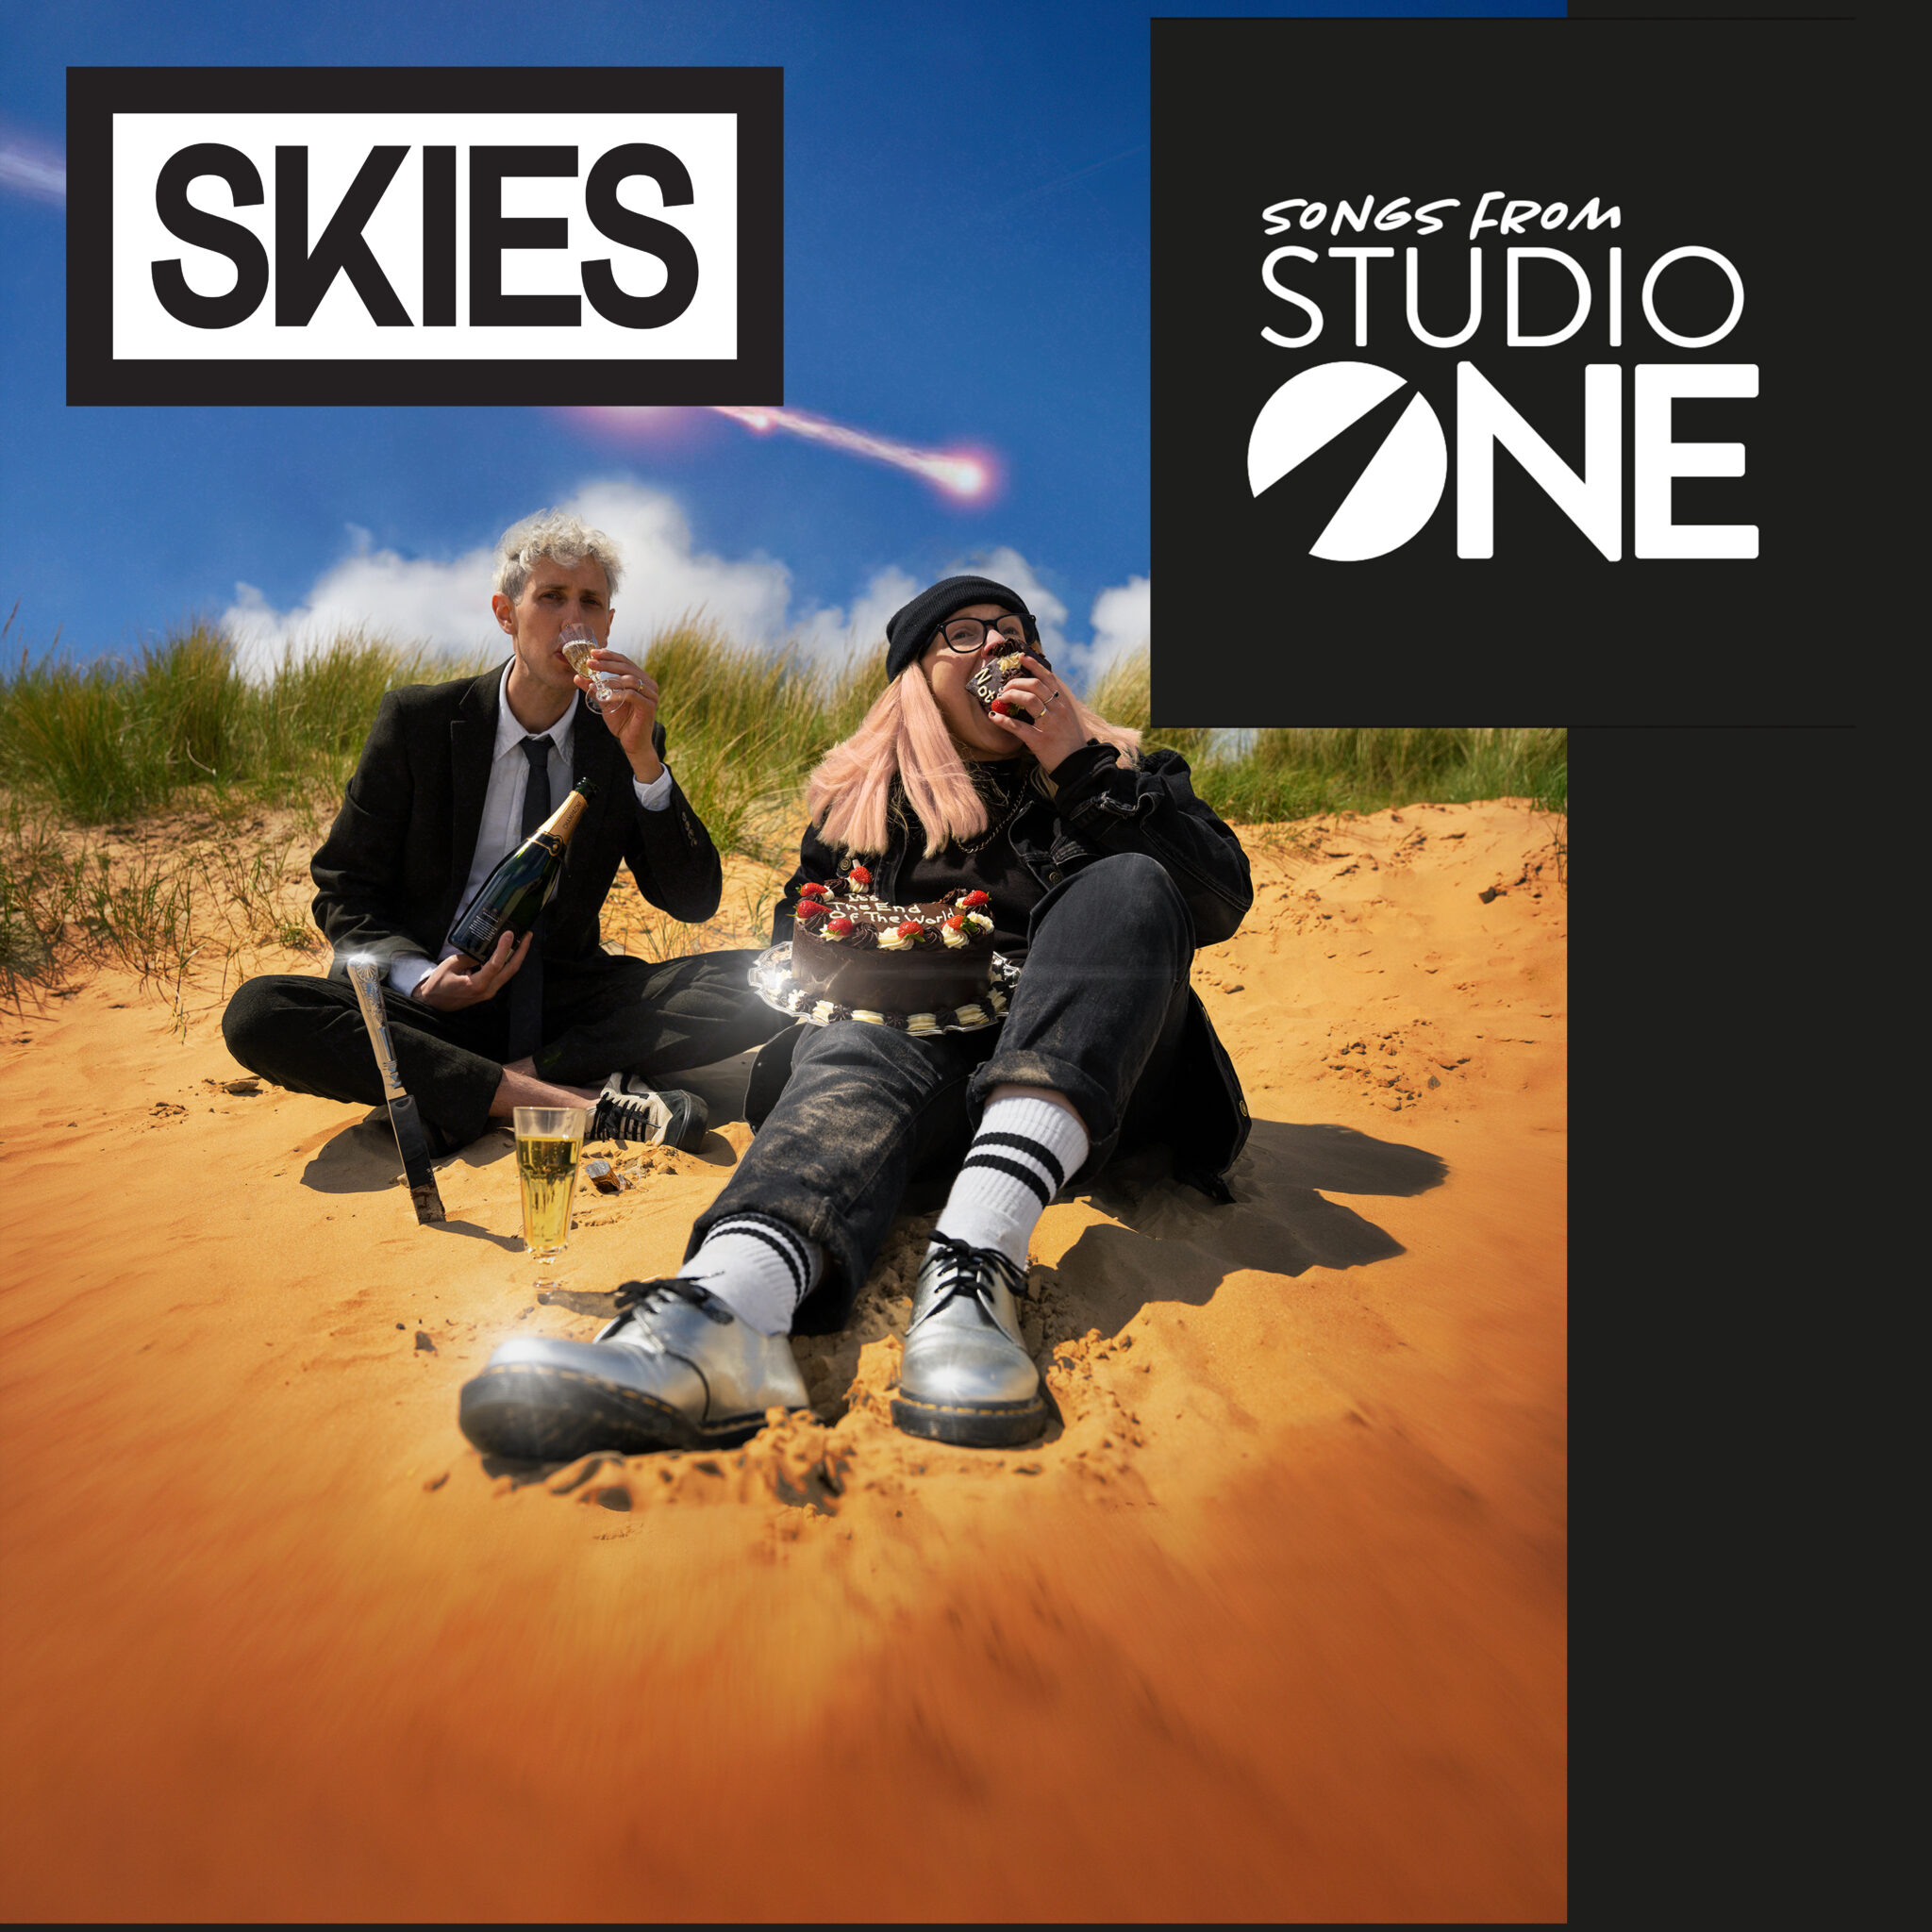 Songs in Studio One with Skies